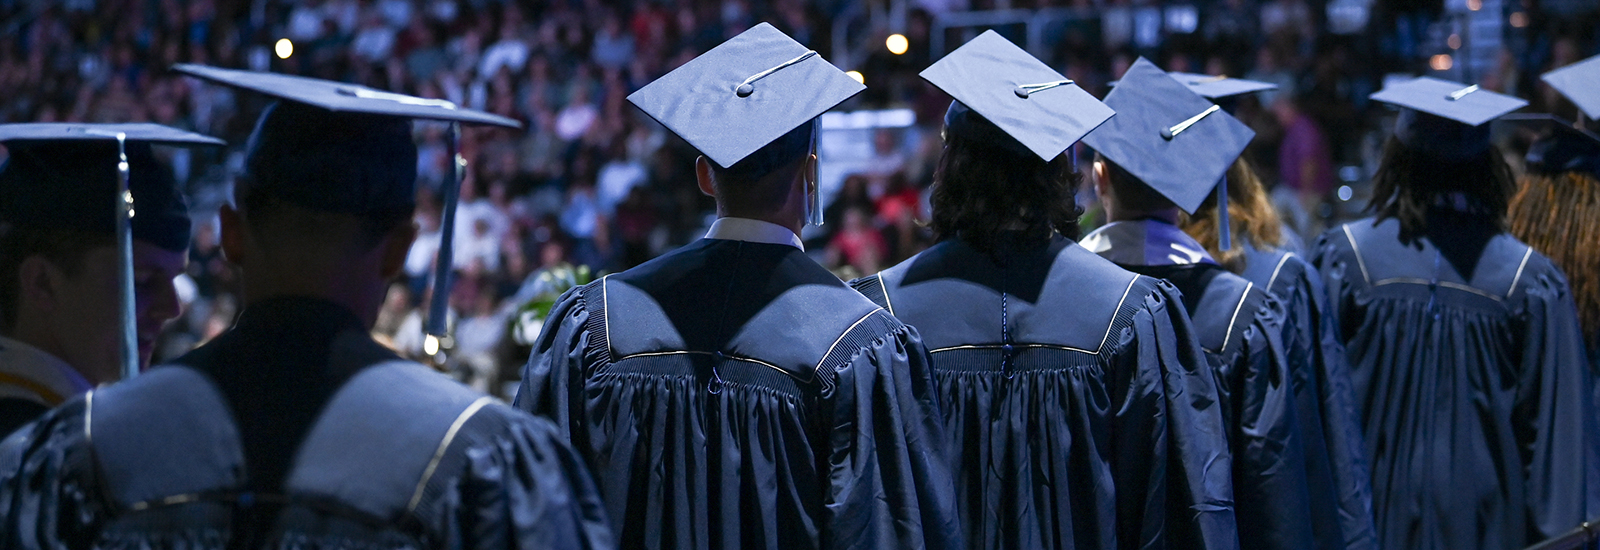 Behind the graduates at graduation